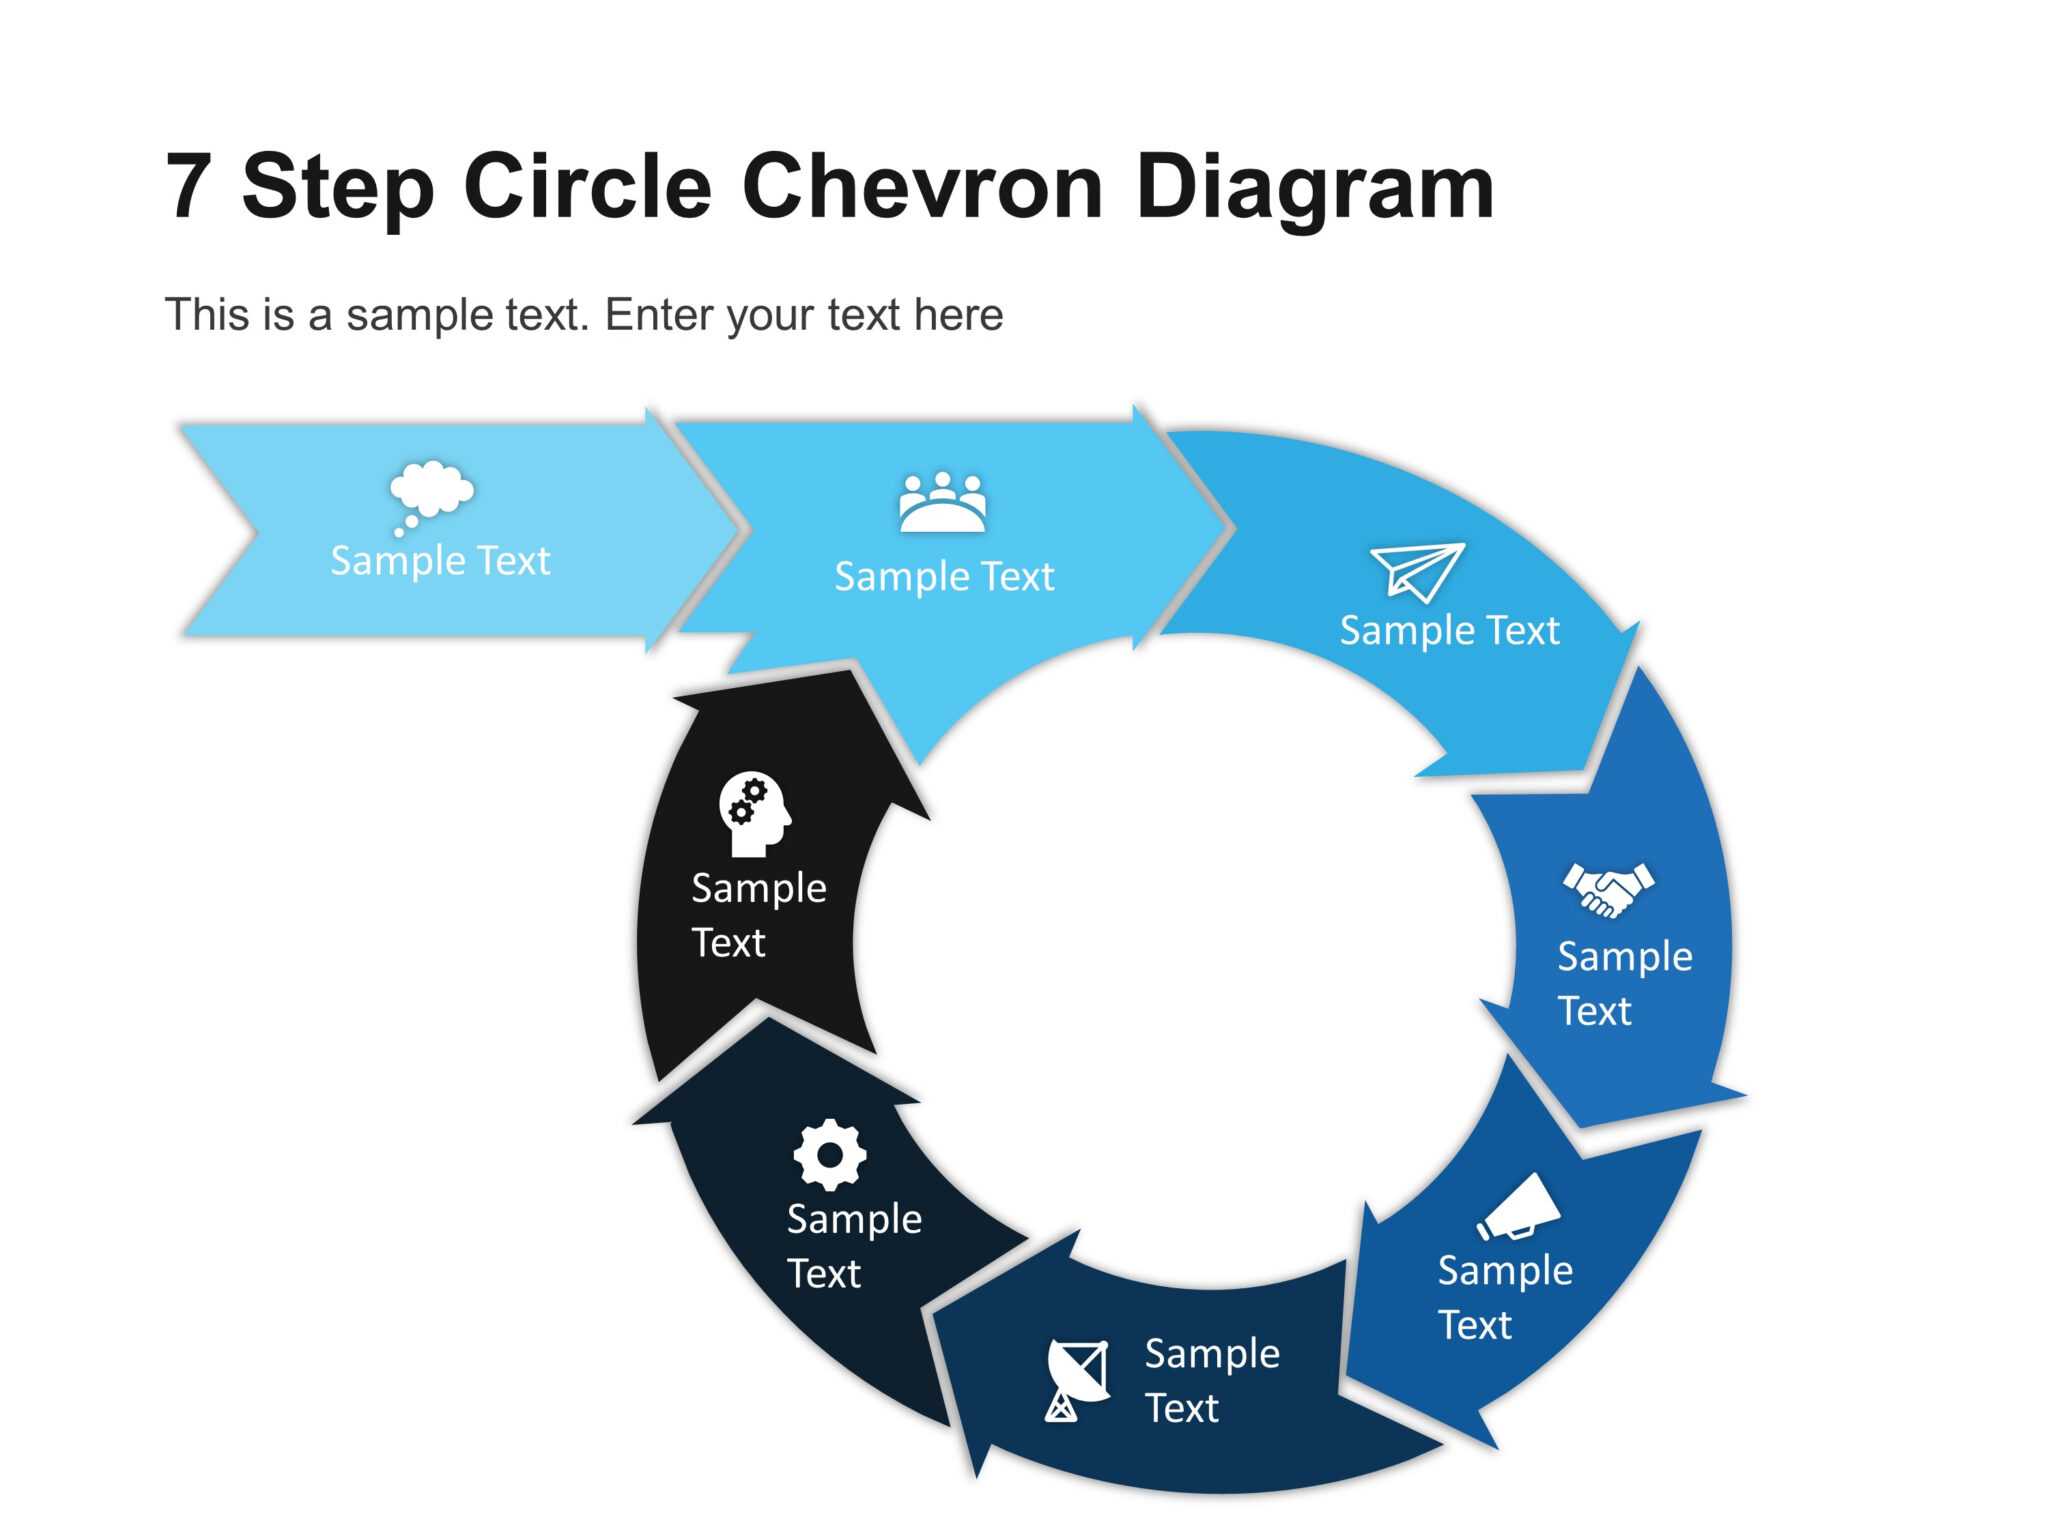 7-step-circular-chevron-diagram-template-chevron-regarding-powerpoint-chevron-template